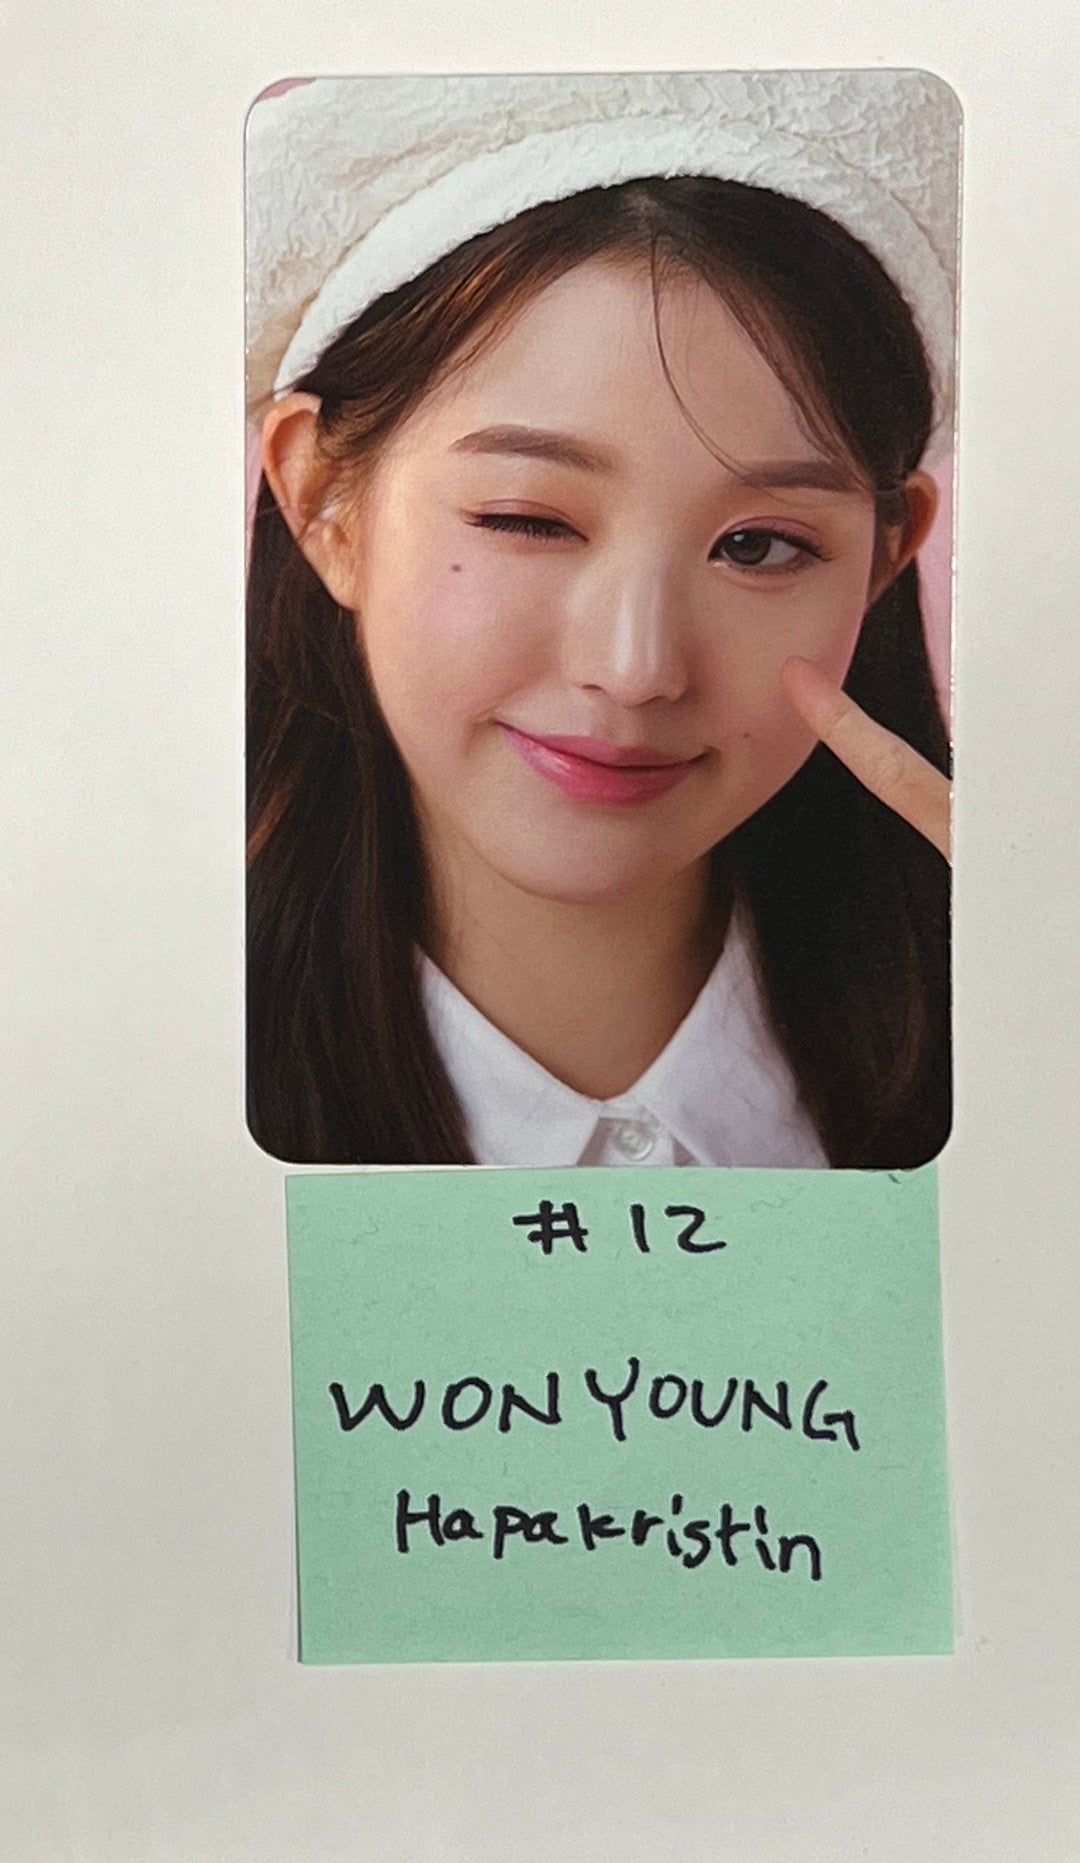 Wonyoung (Of IVE) Hapa X Jang Won Young - Hapa Kristin Event Photocards Ver.4 [24.2.28]